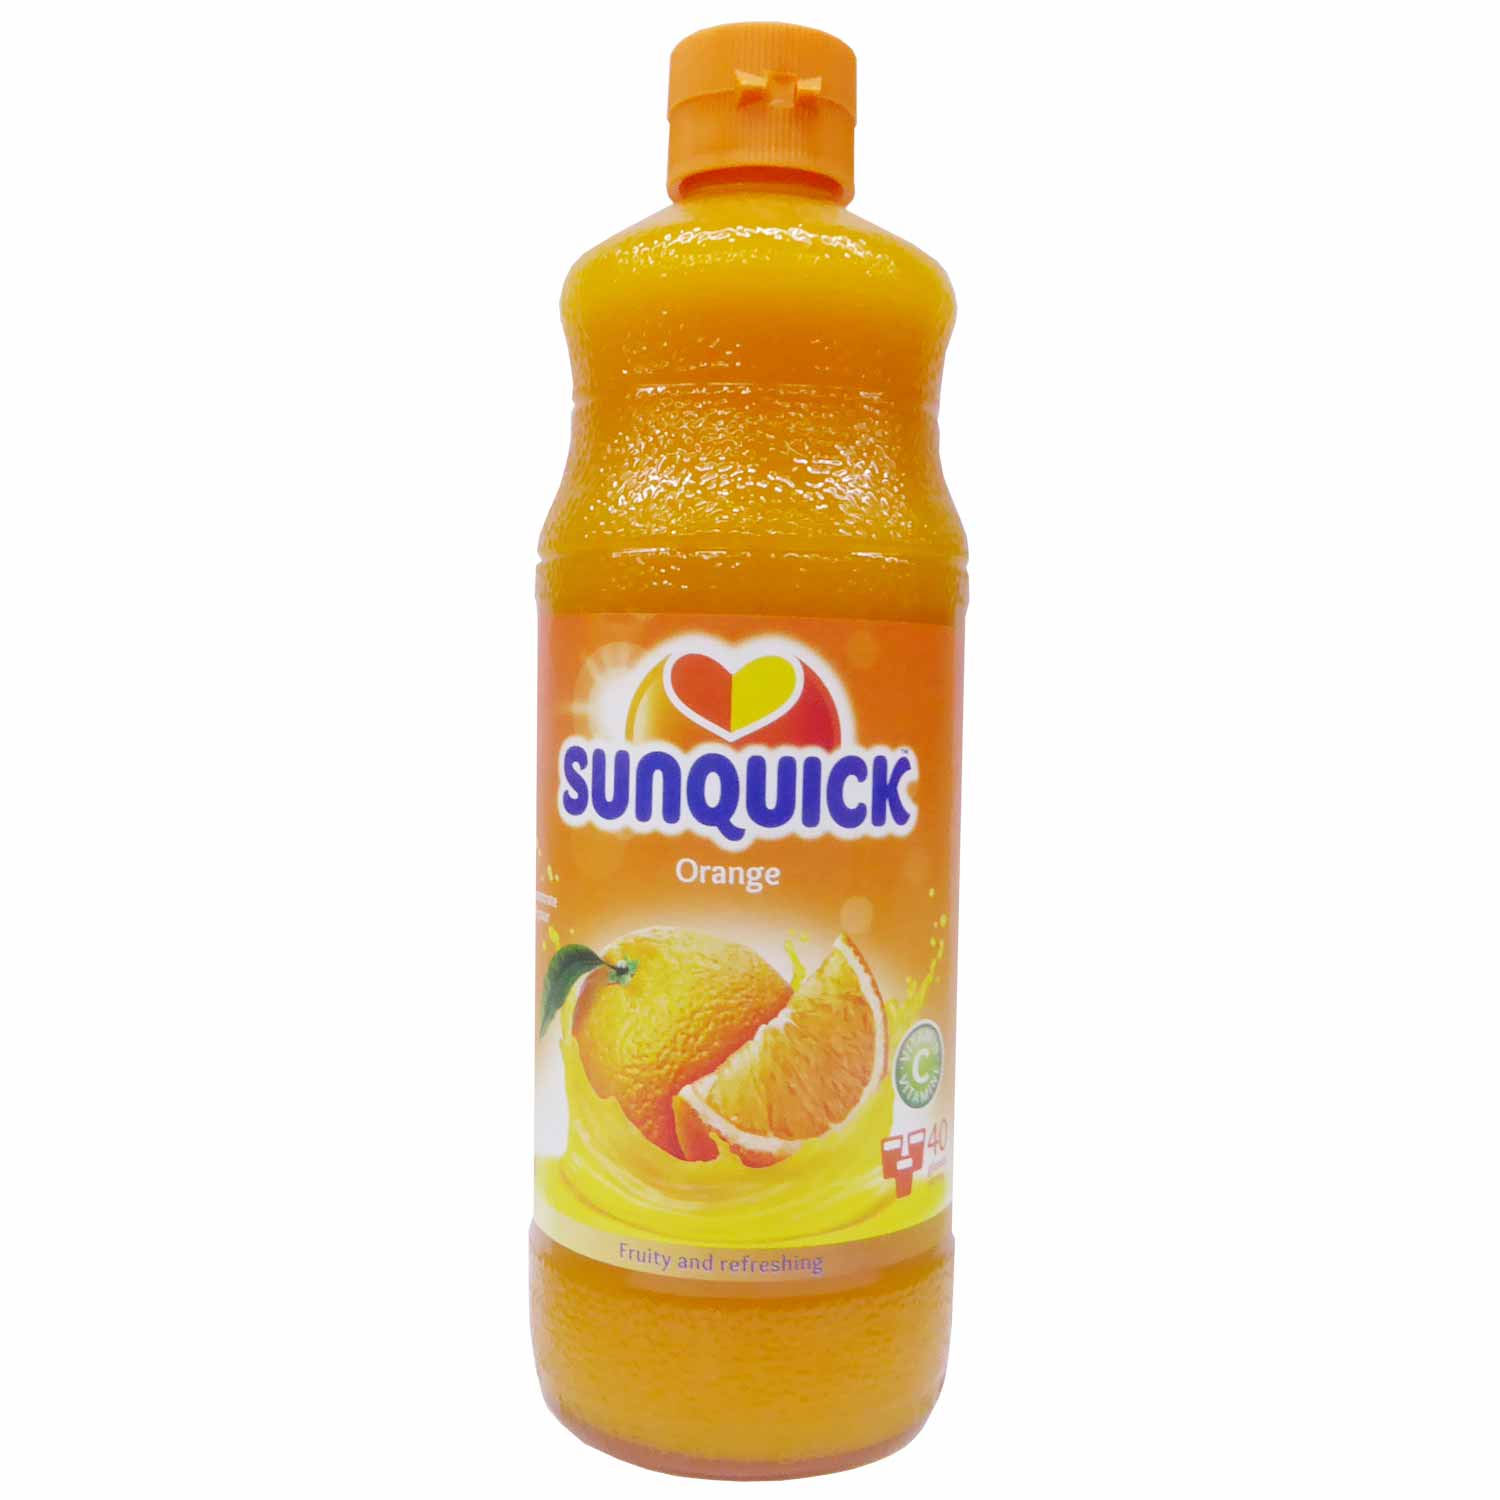 sunquick